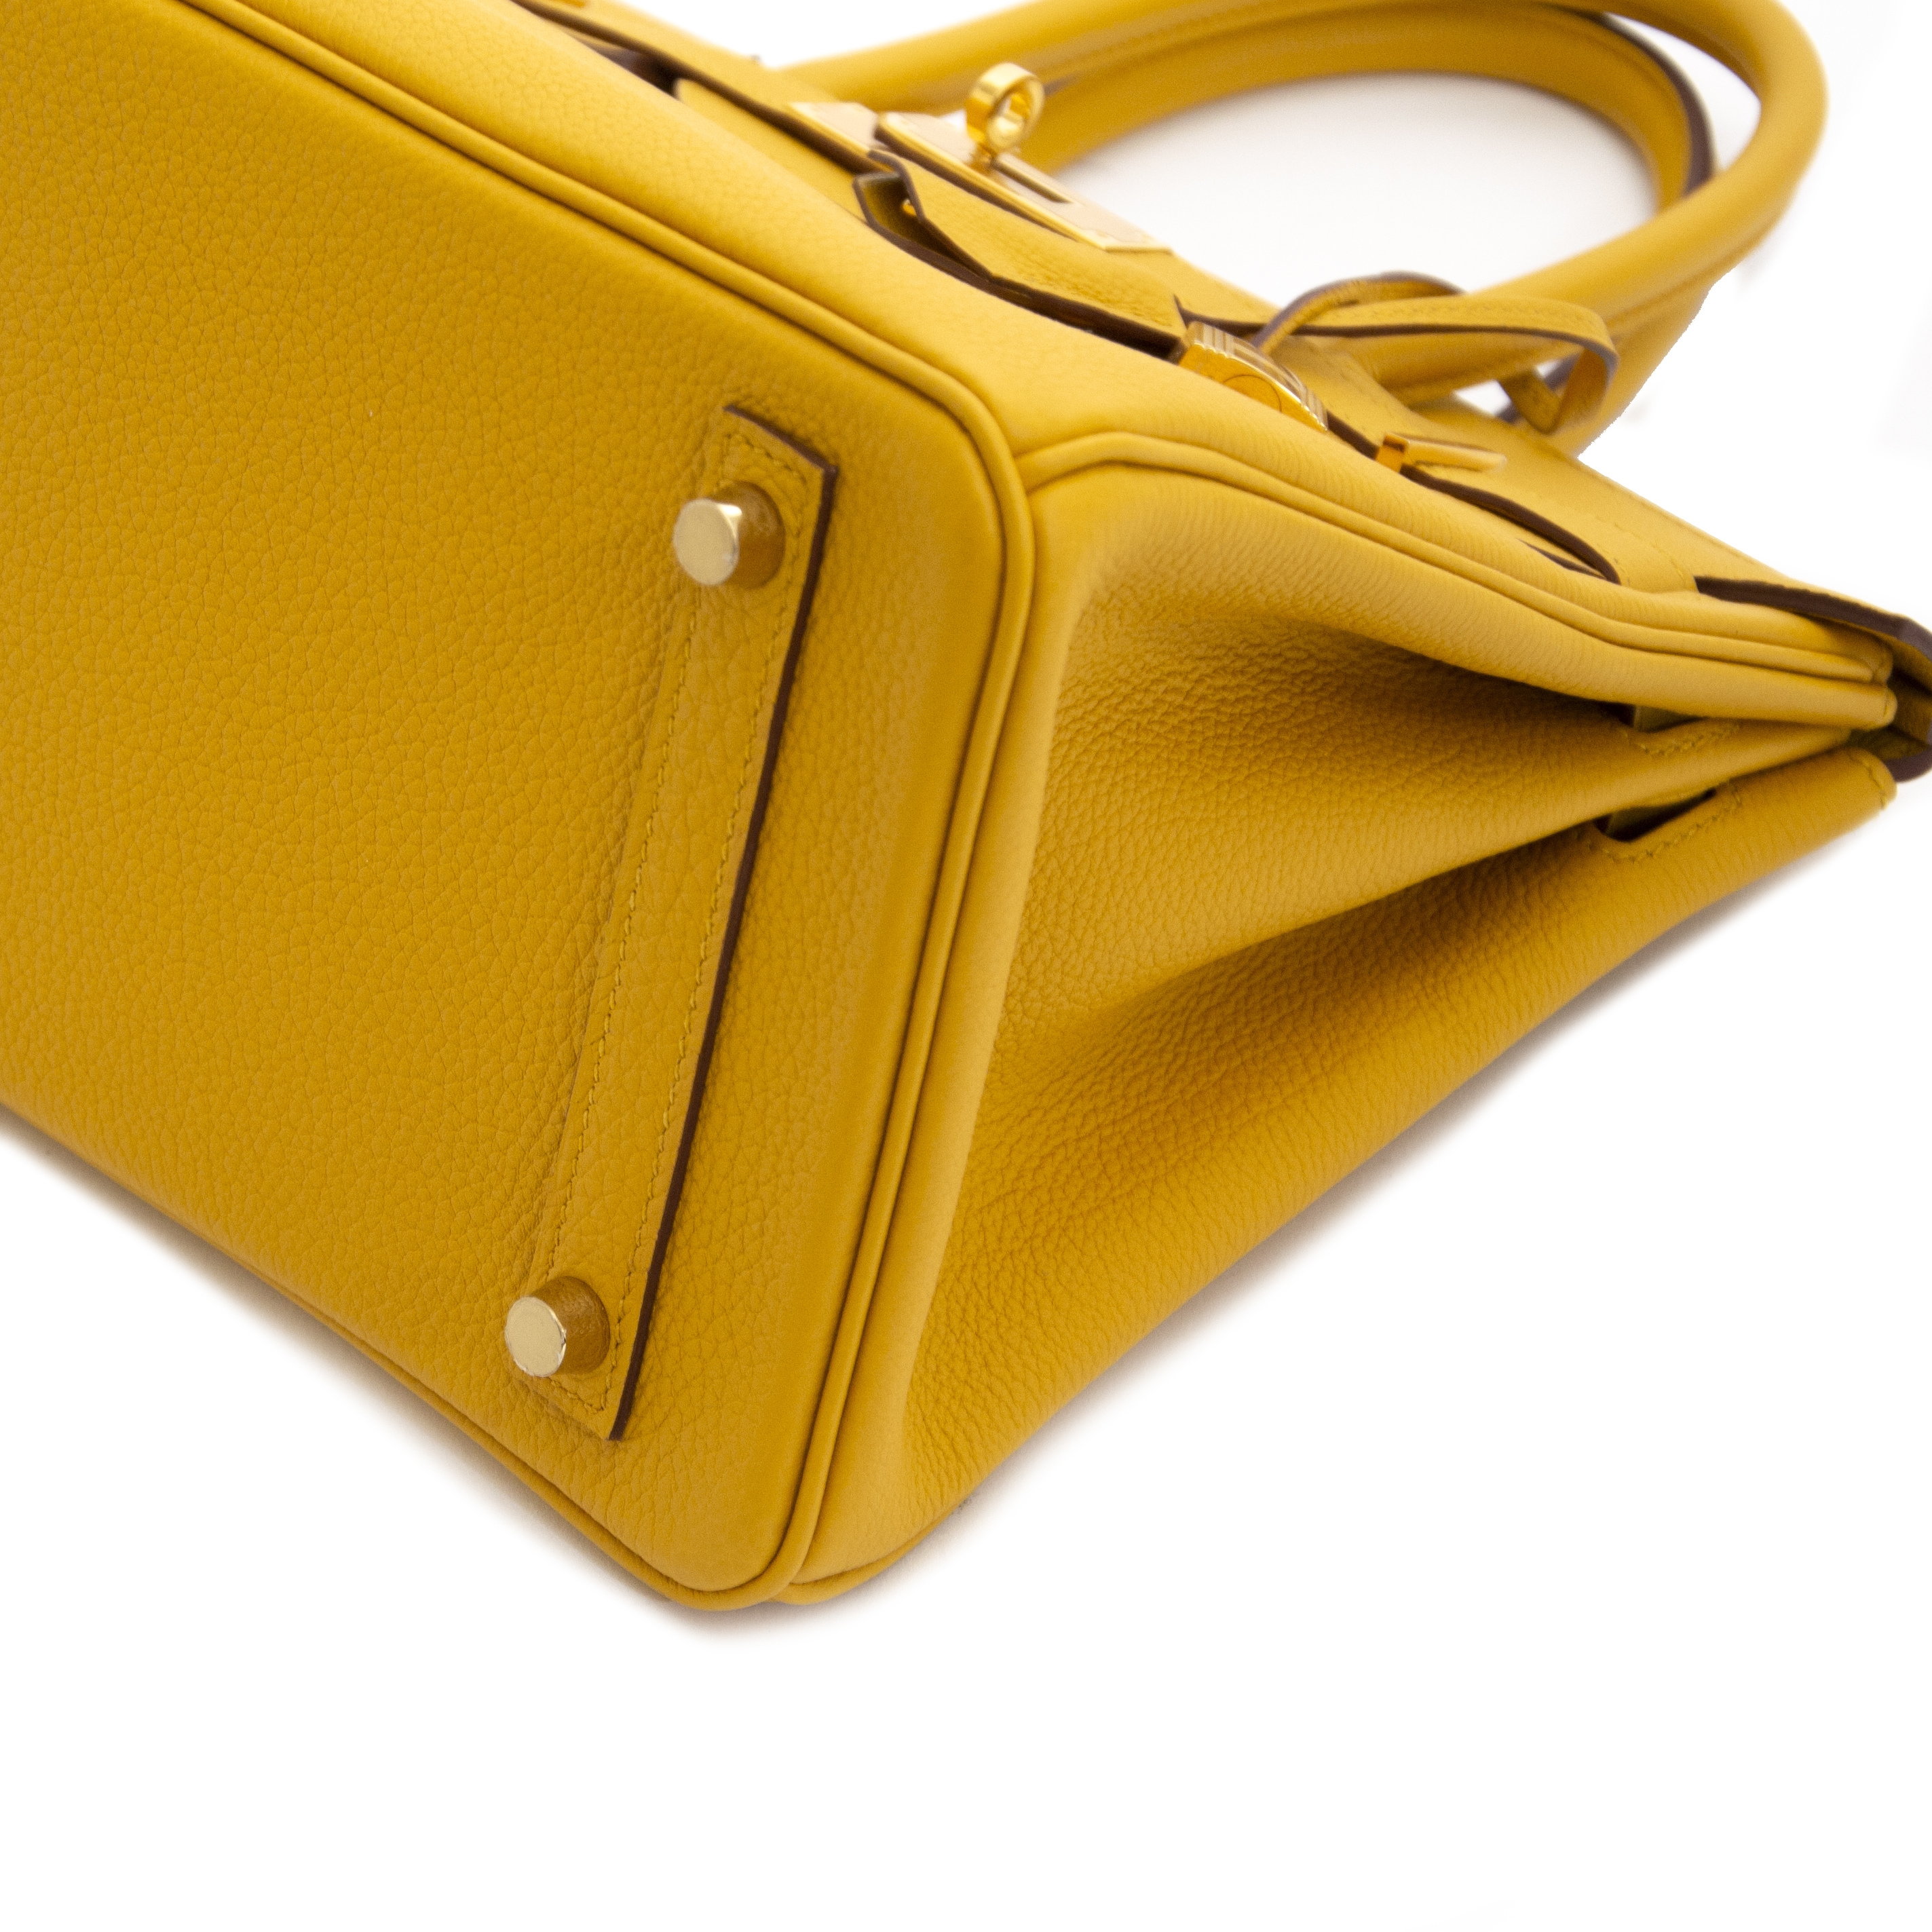 Hermès Jaune Ambre (Amber) Togo Birkin 30cm Gold Hardware